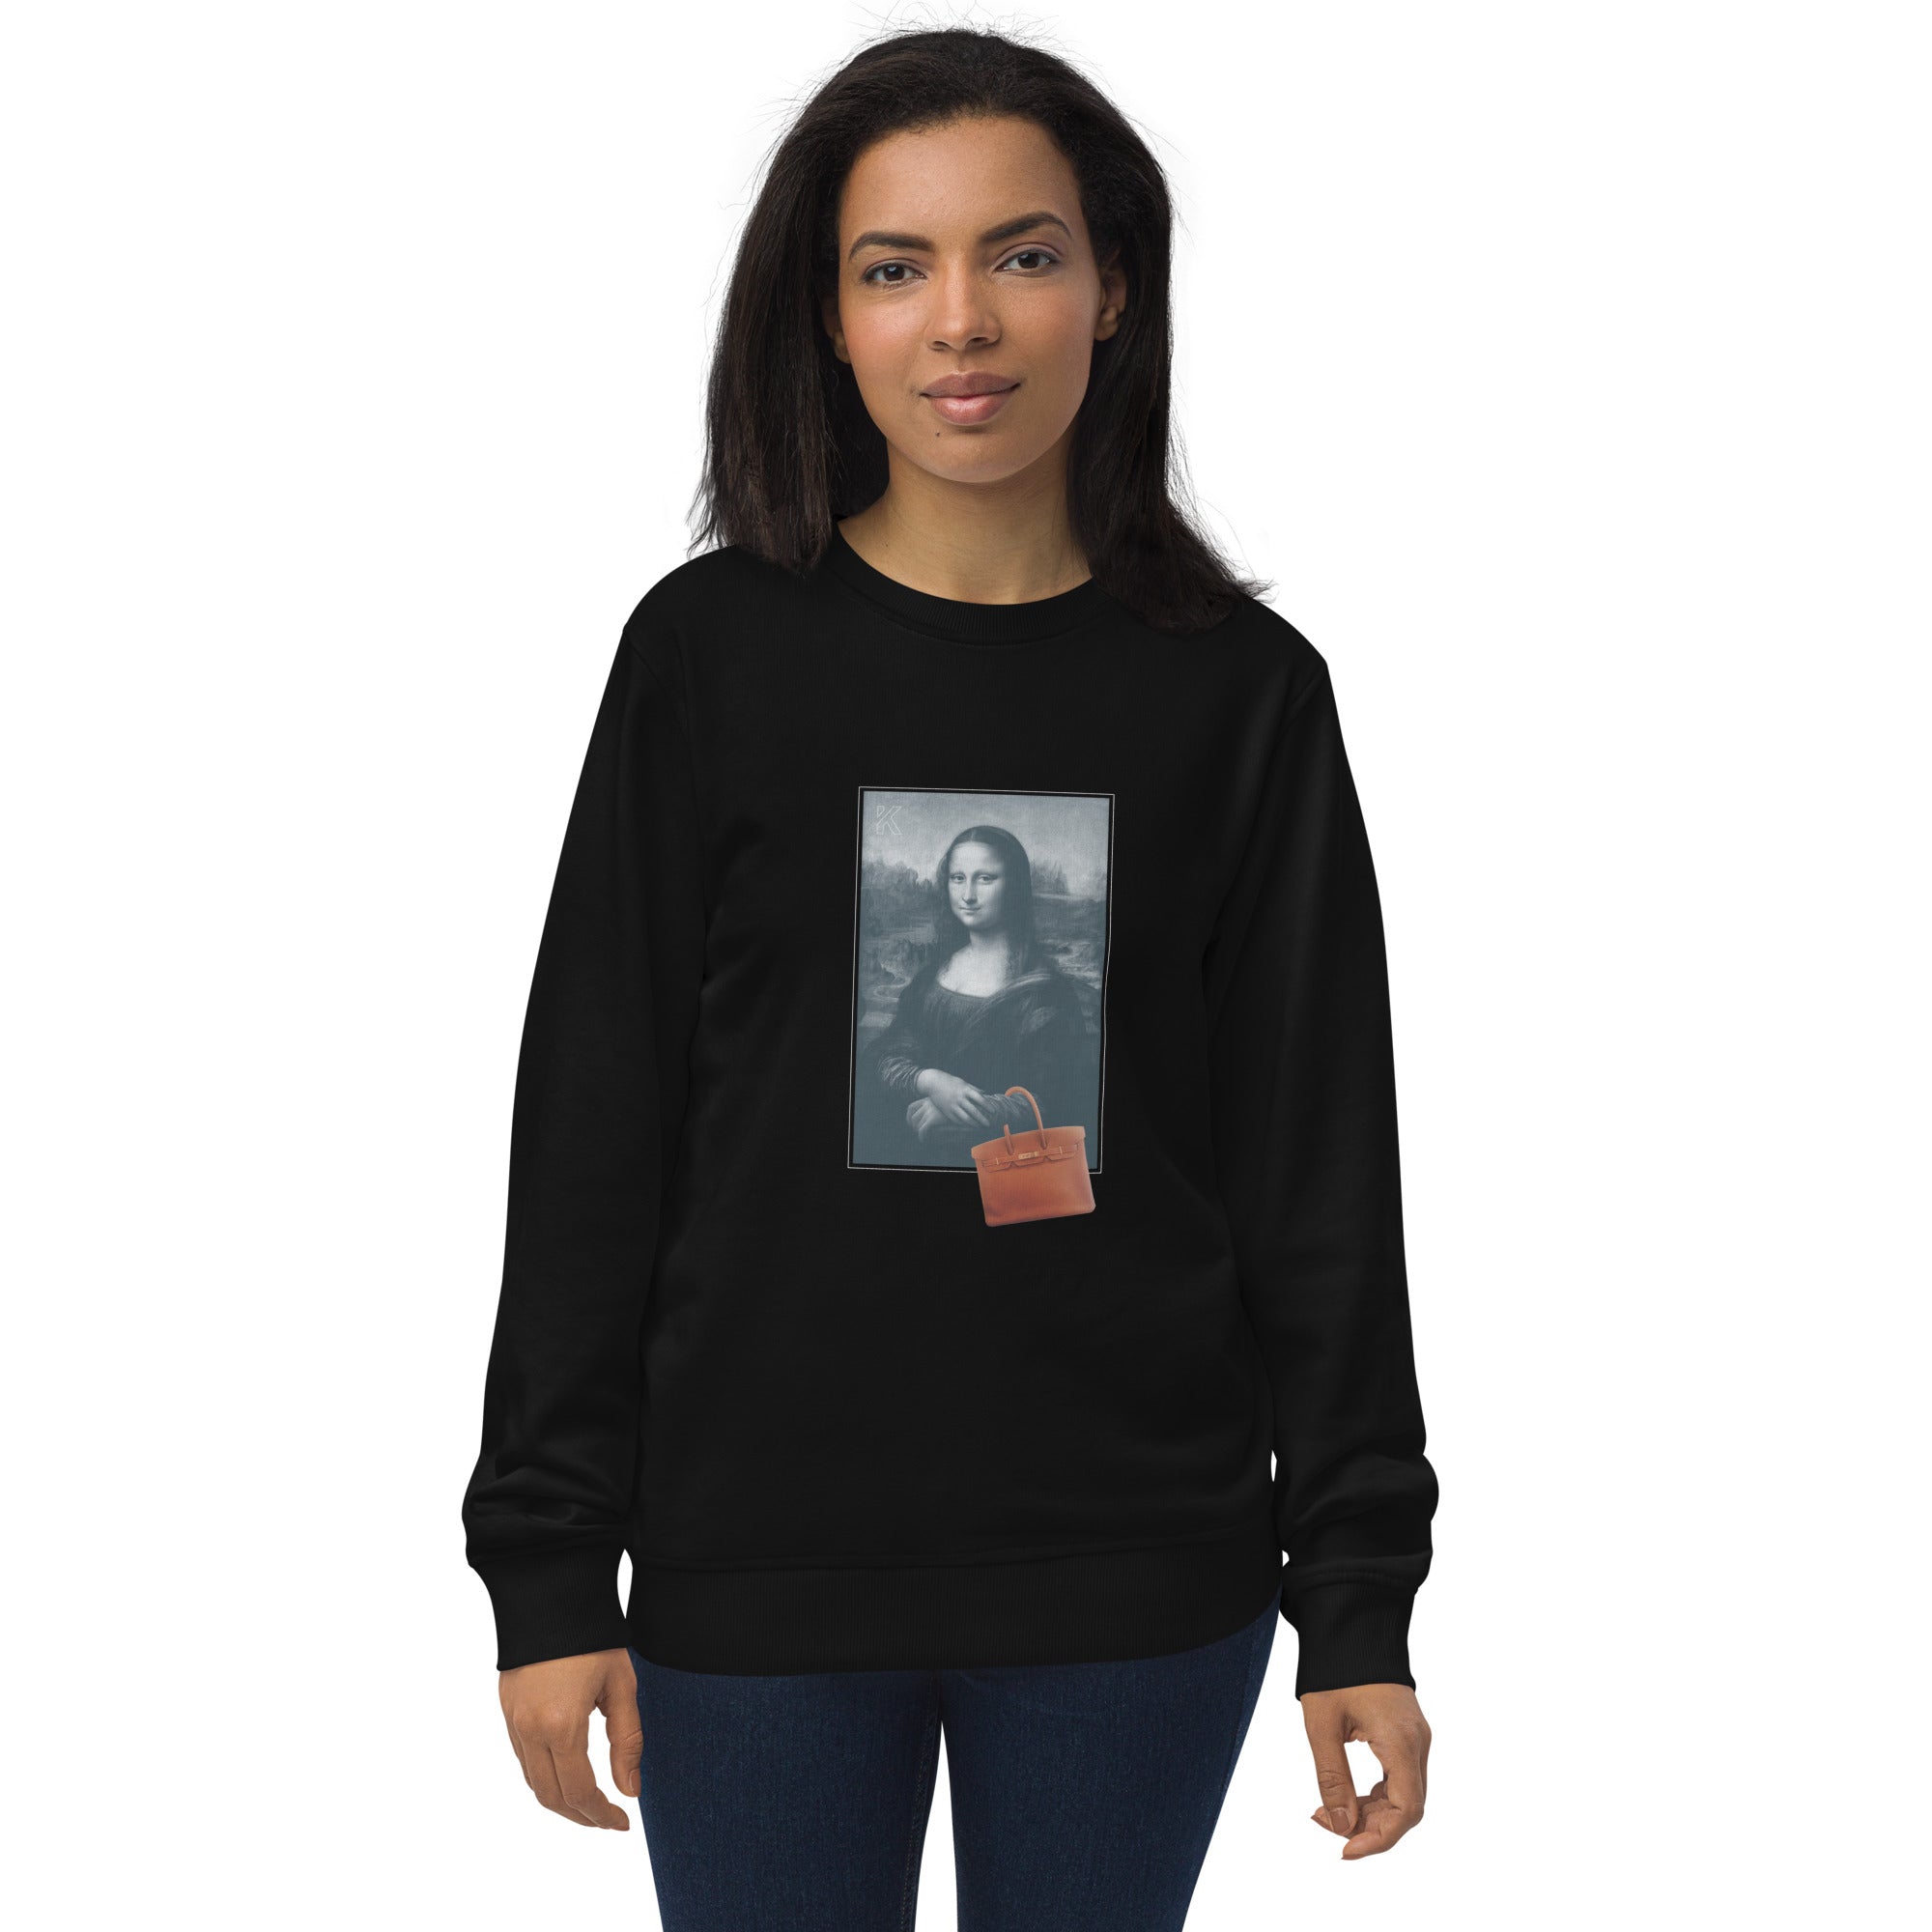 Fashionista Mona Lisa Women's Organic Sweatshirt